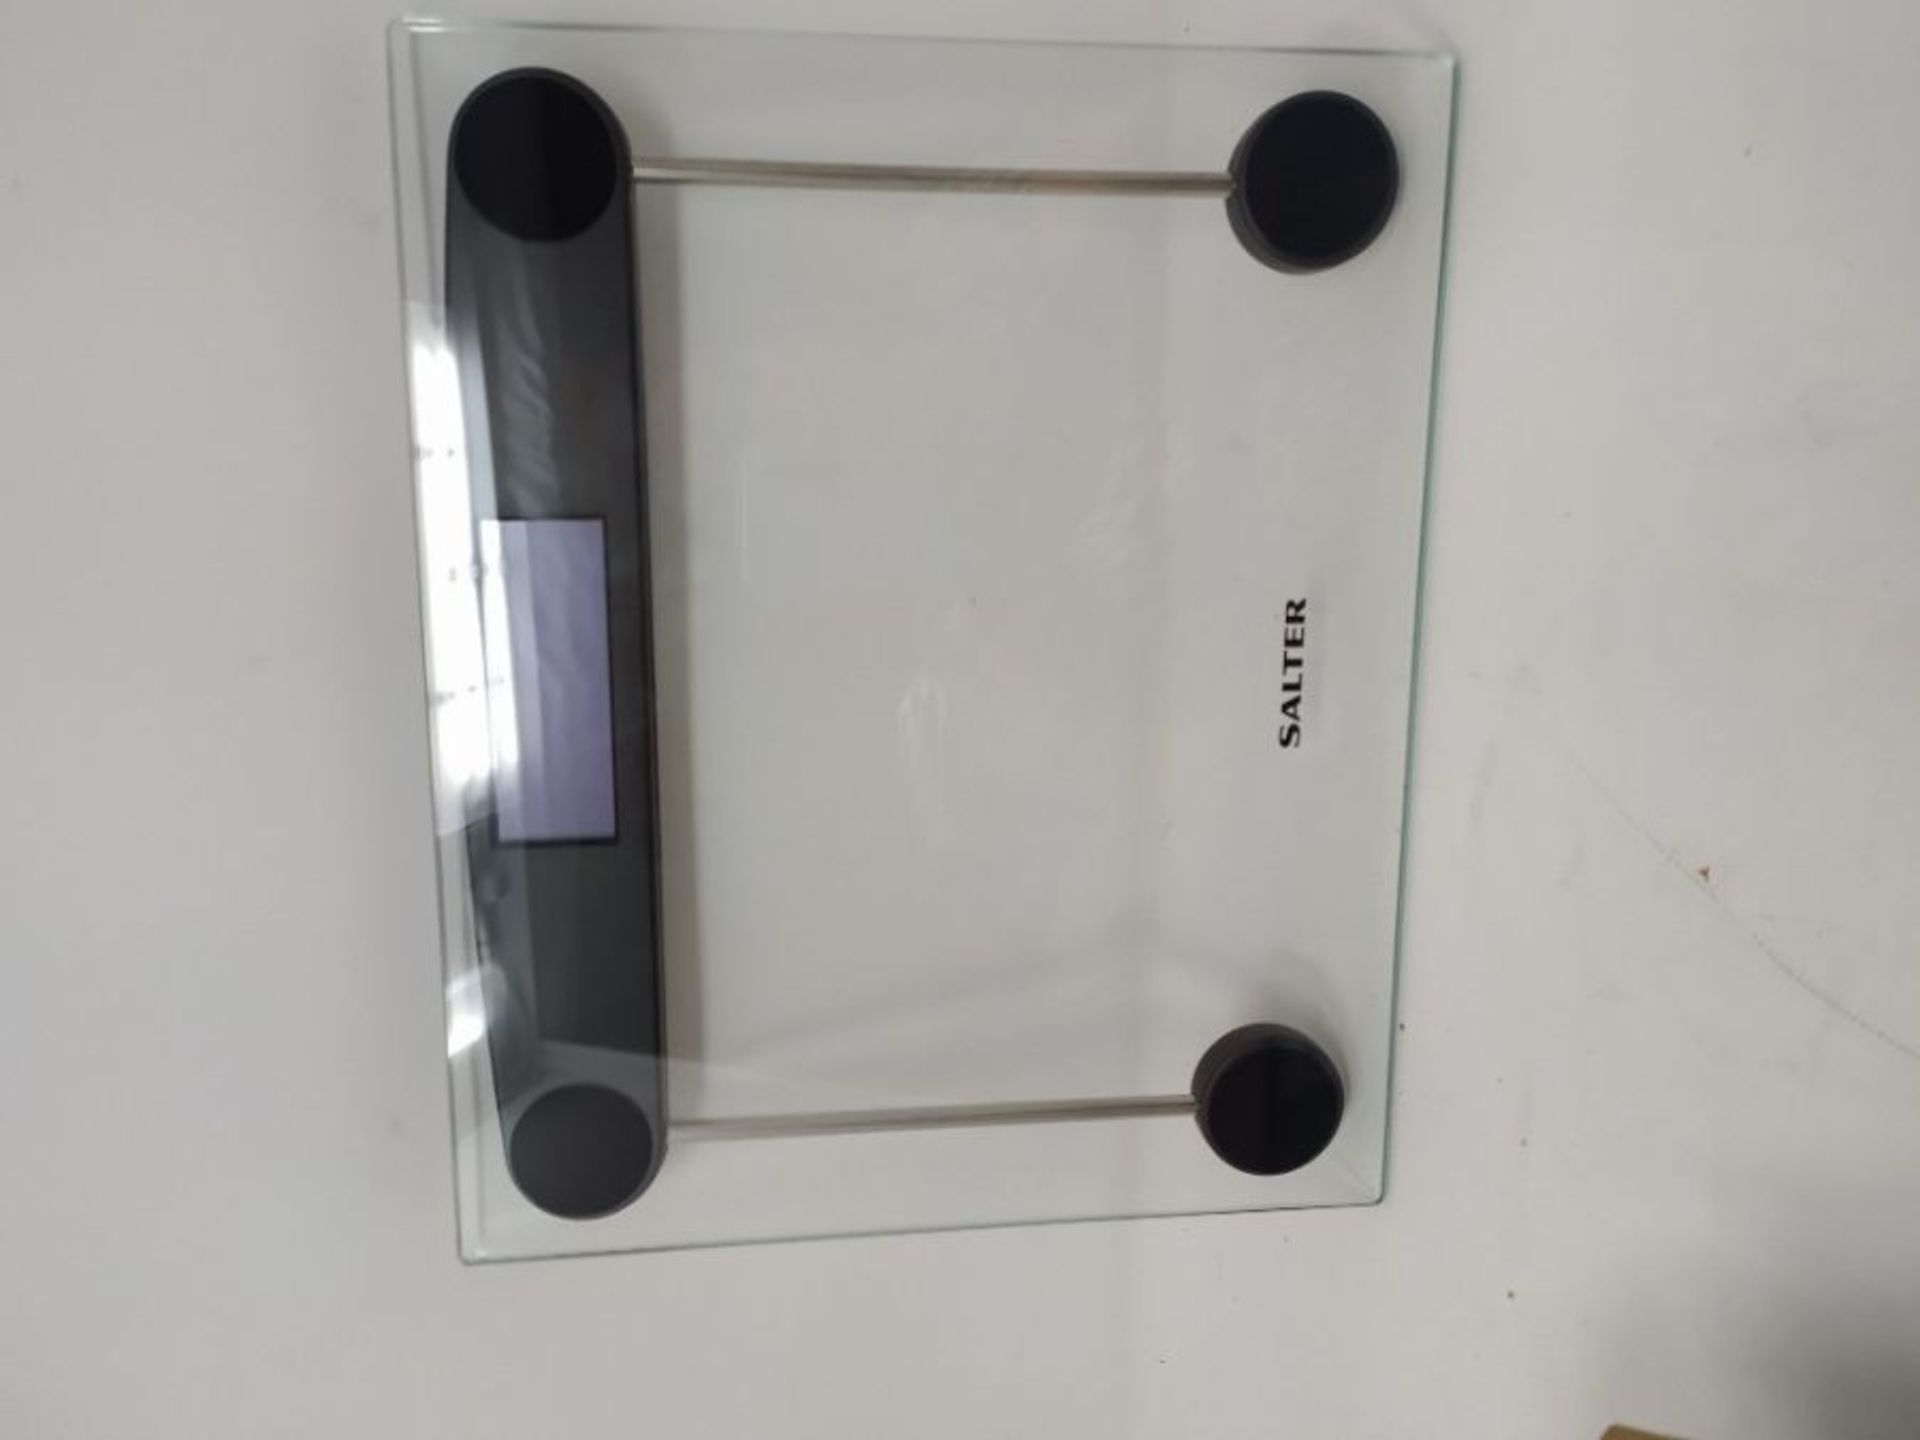 Salter Compact Digital Bathroom Scales - Image 2 of 2